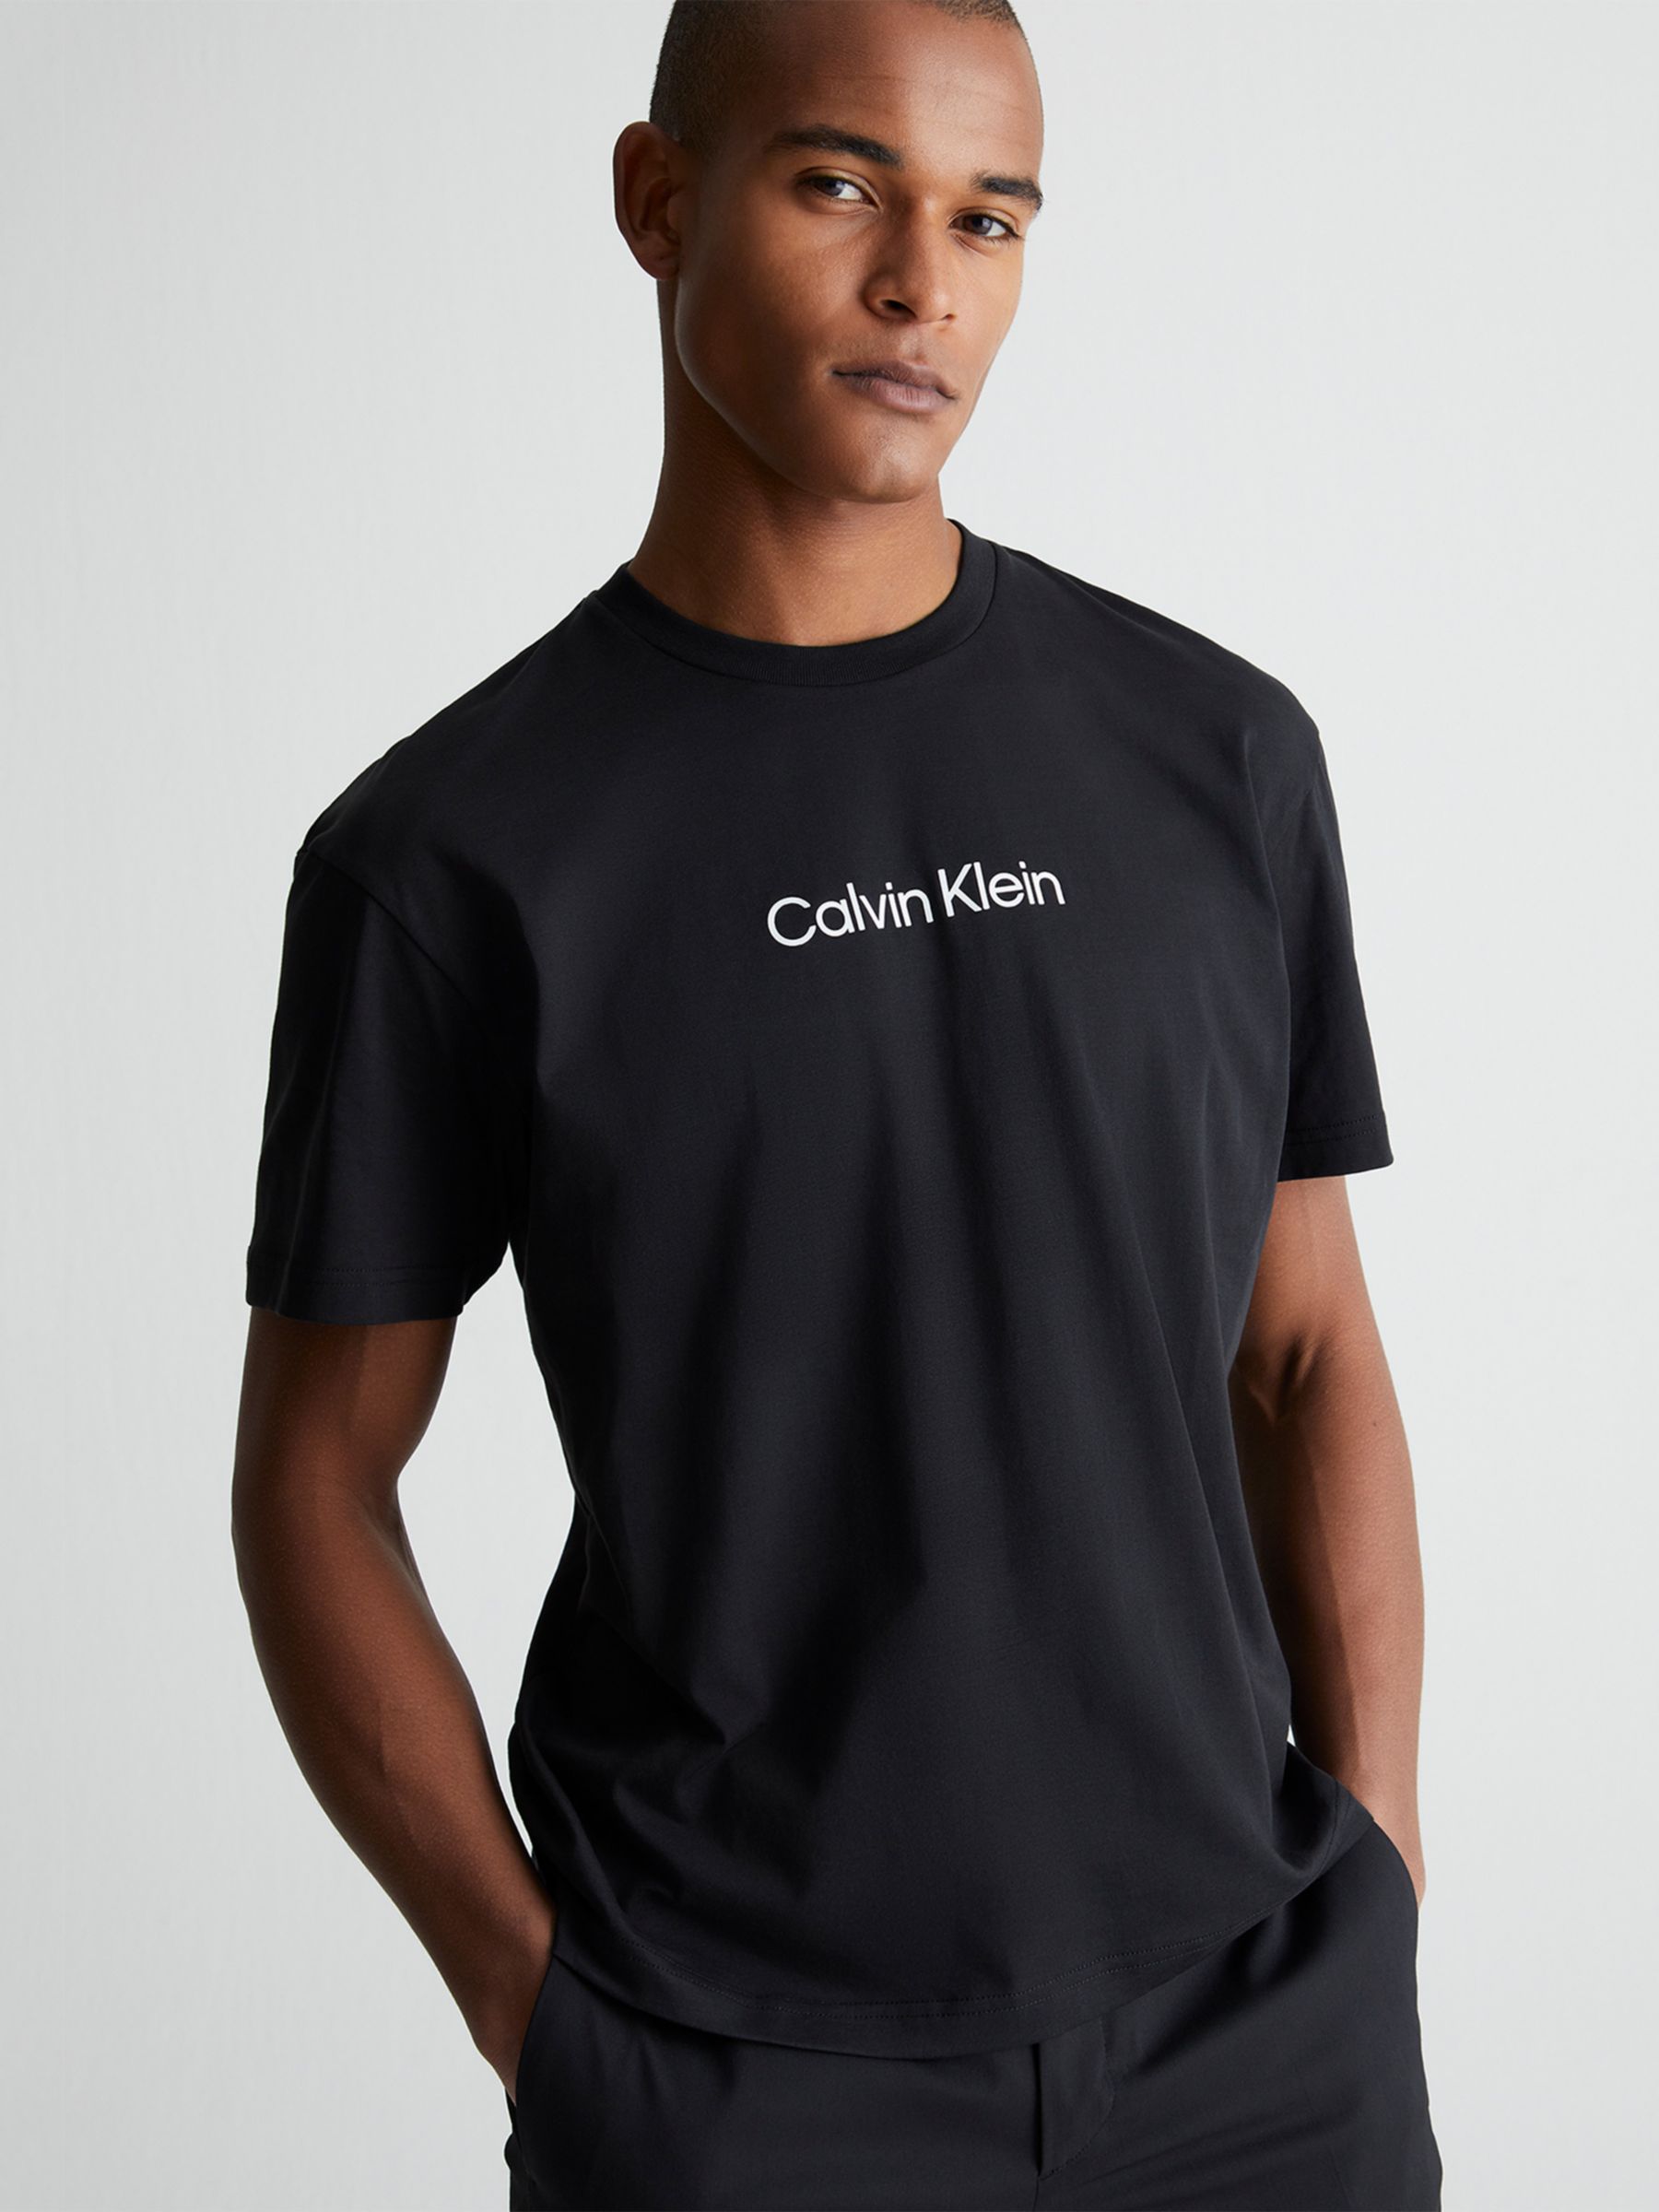 Calvin Klein  John Lewis & Partners